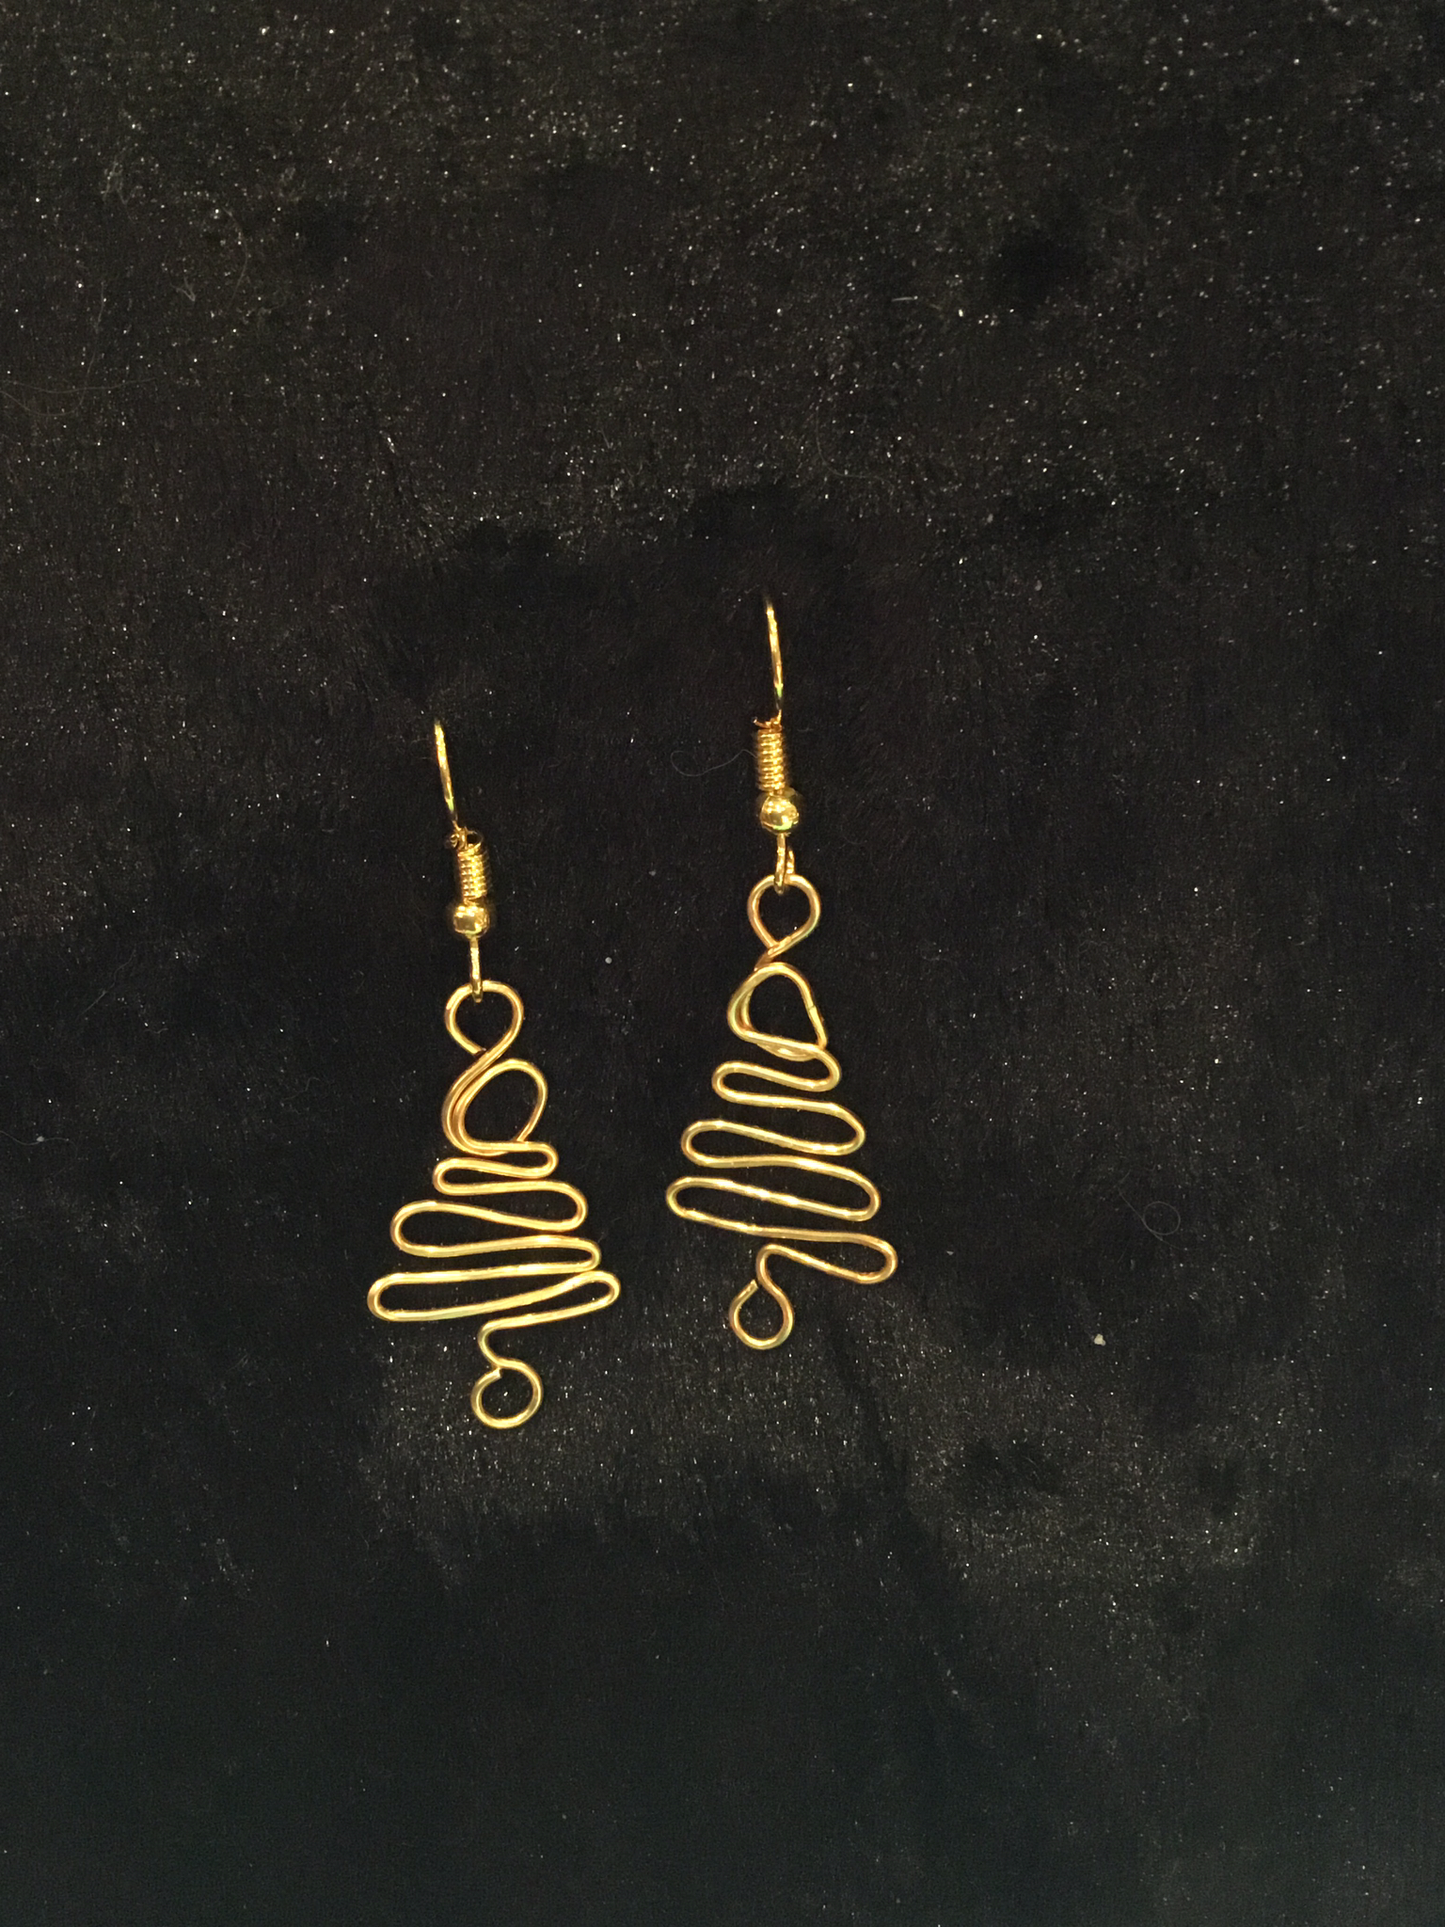 Wire Christmas tree earrings